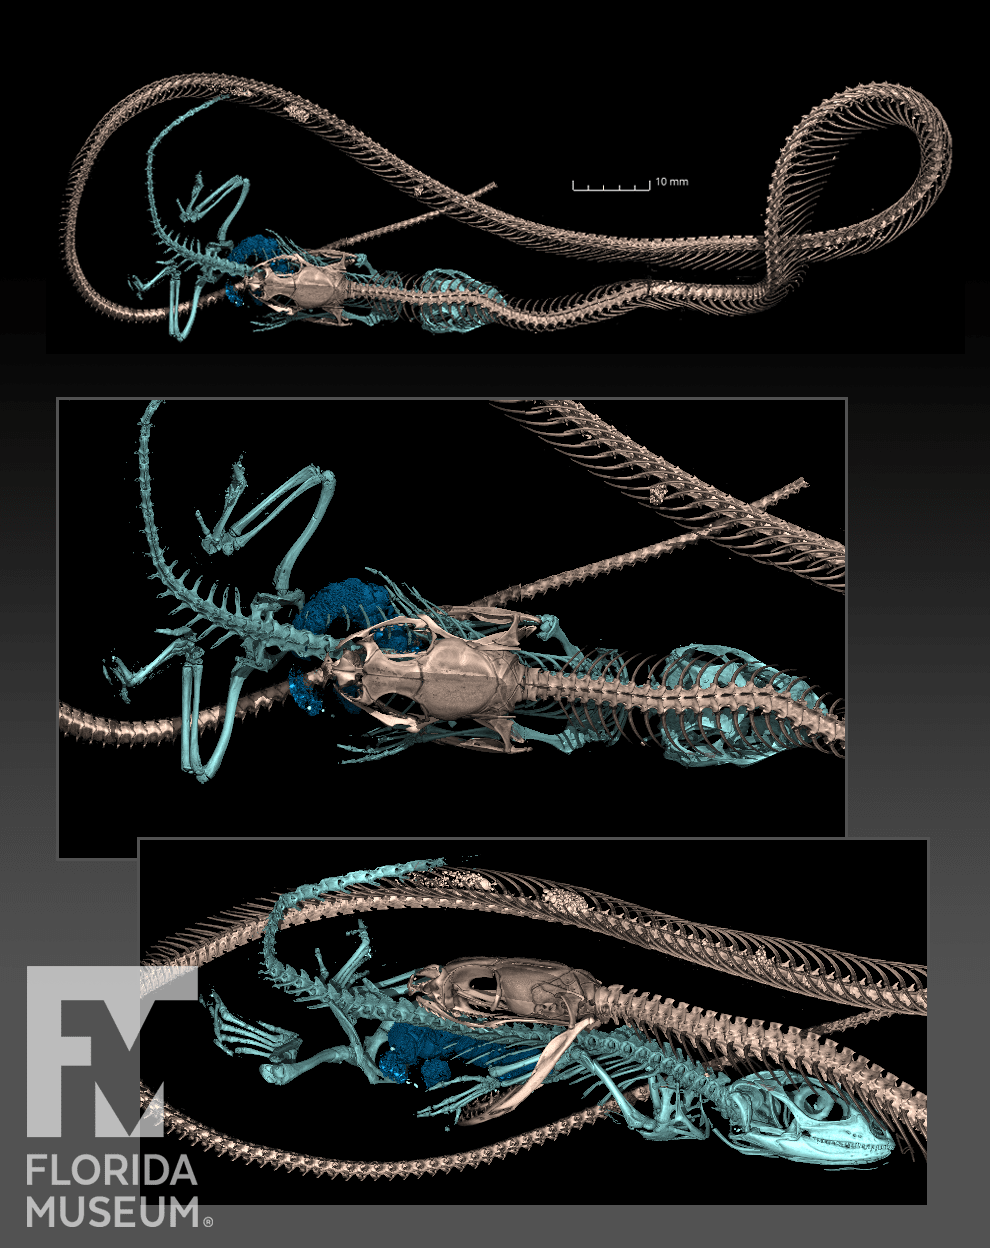 Rendering of CT scan of a black racer snake partway through eating a fence lizard. Snake skeelton shown in light brown, lizard skeleton shown in light blue.